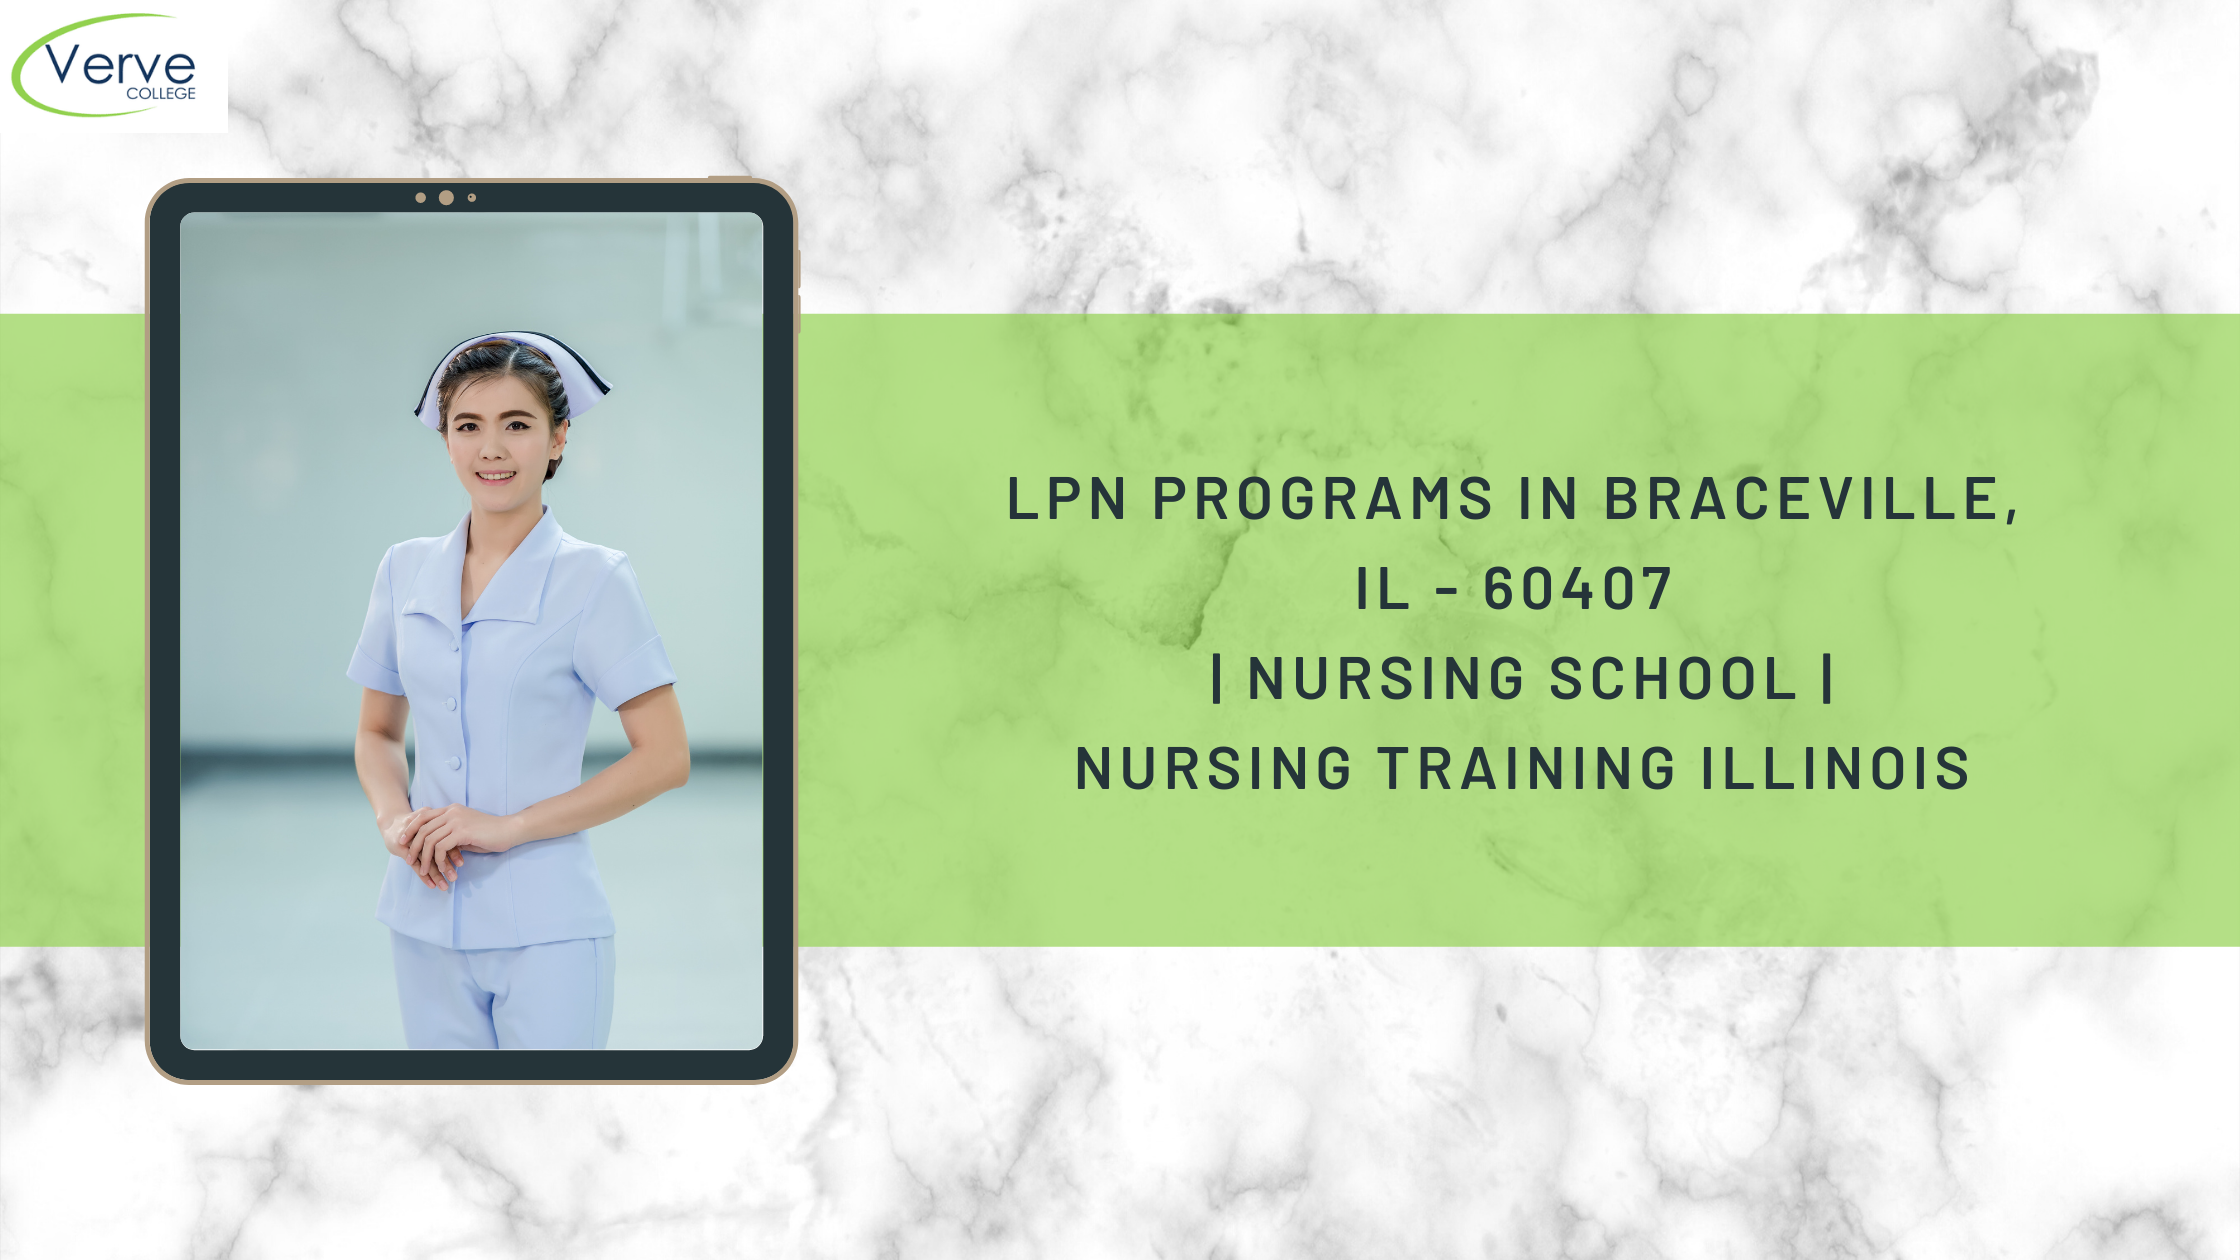 LPN Programs in Braceville, IL – 60407 | Nursing School | Nursing Training Illinois